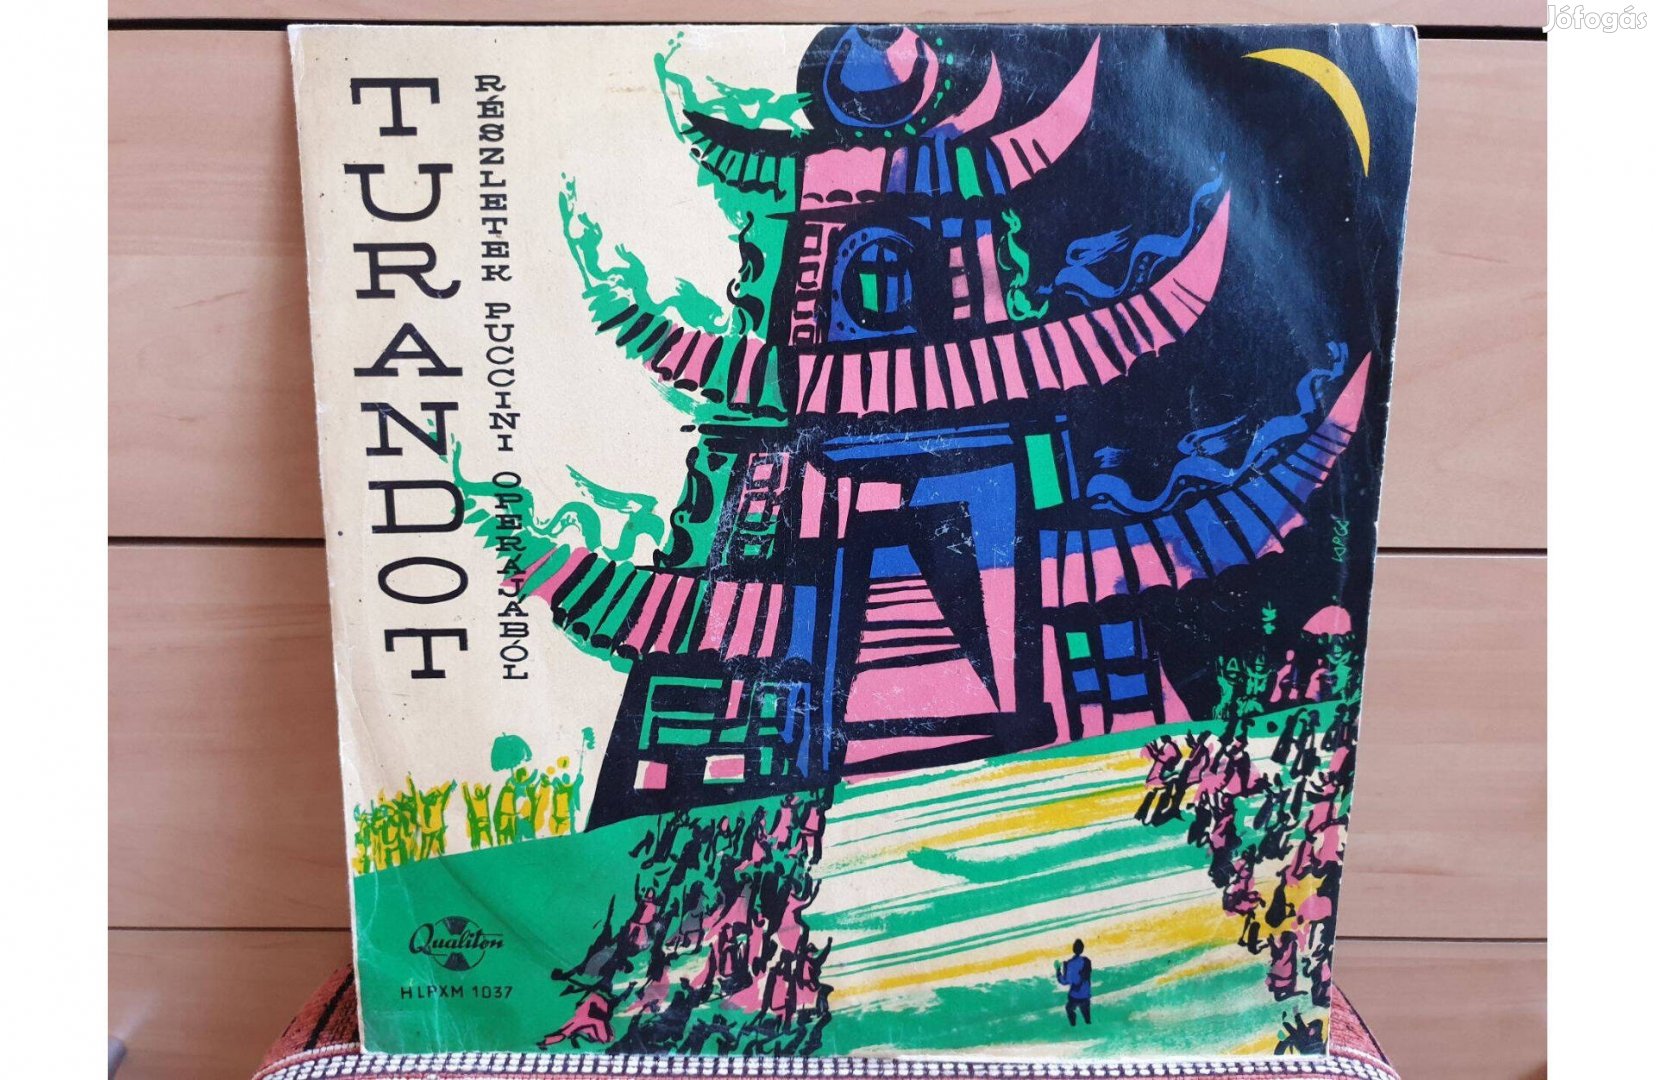 Puccini - Turandot hanglemez bakelit lemez Vinyl